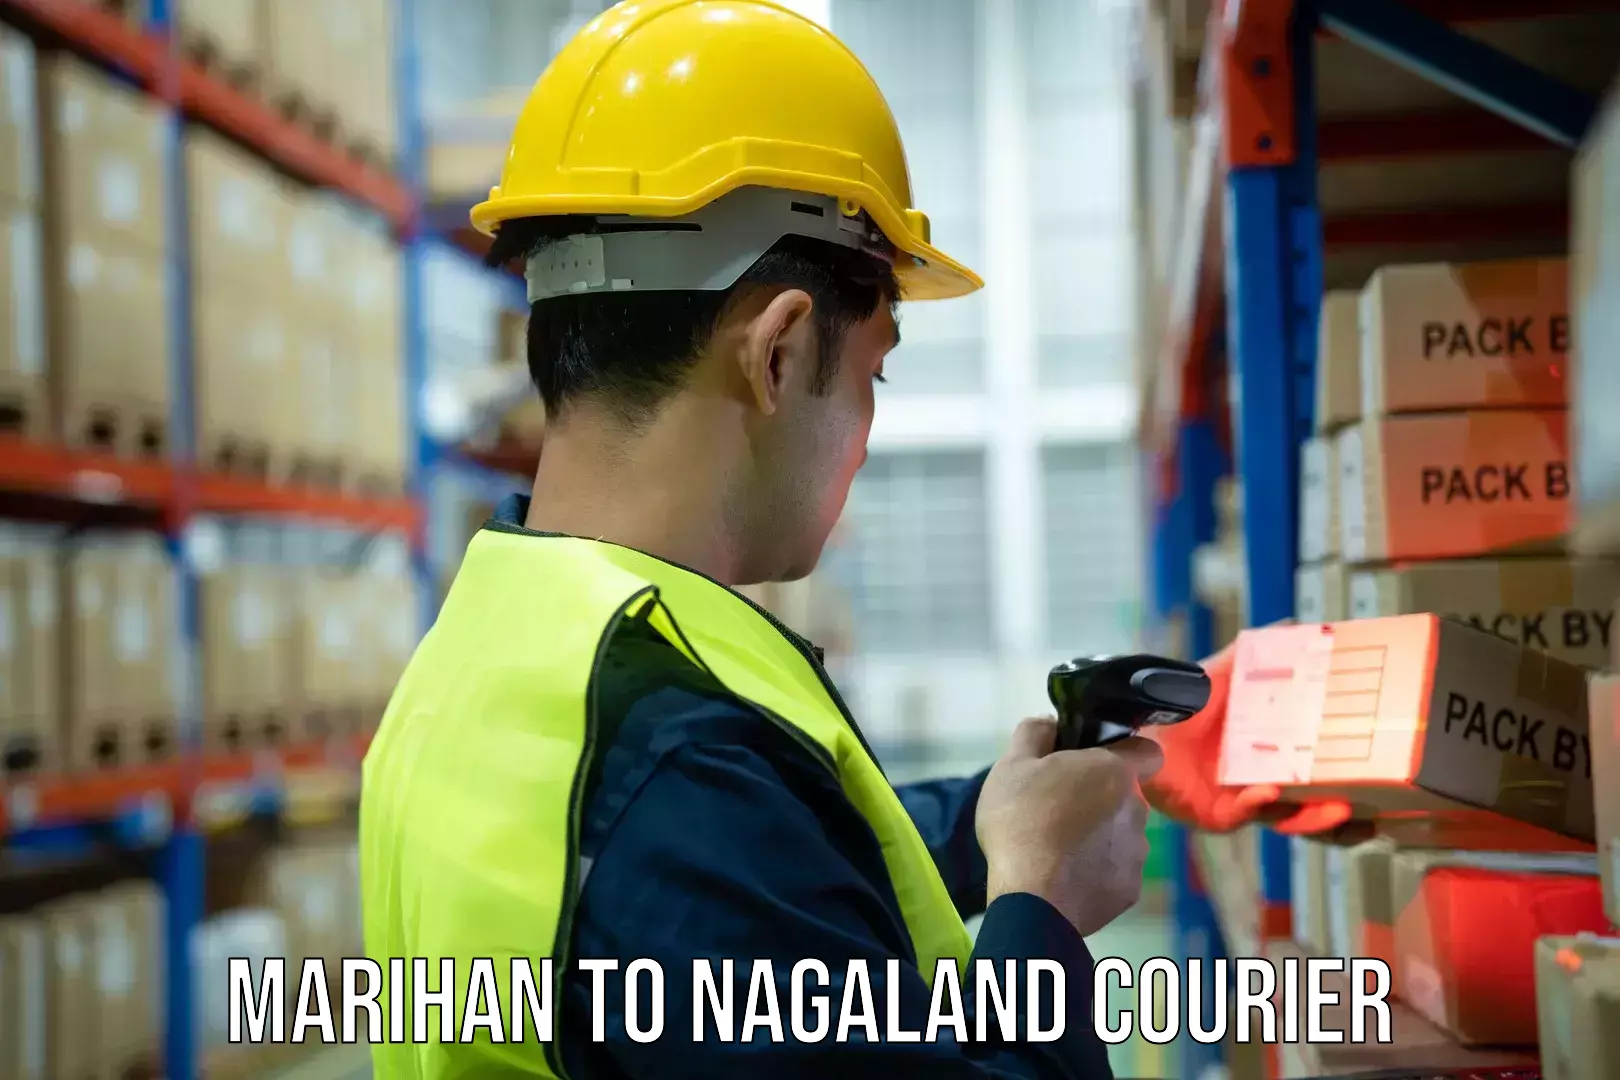 Lightweight parcel options Marihan to Nagaland